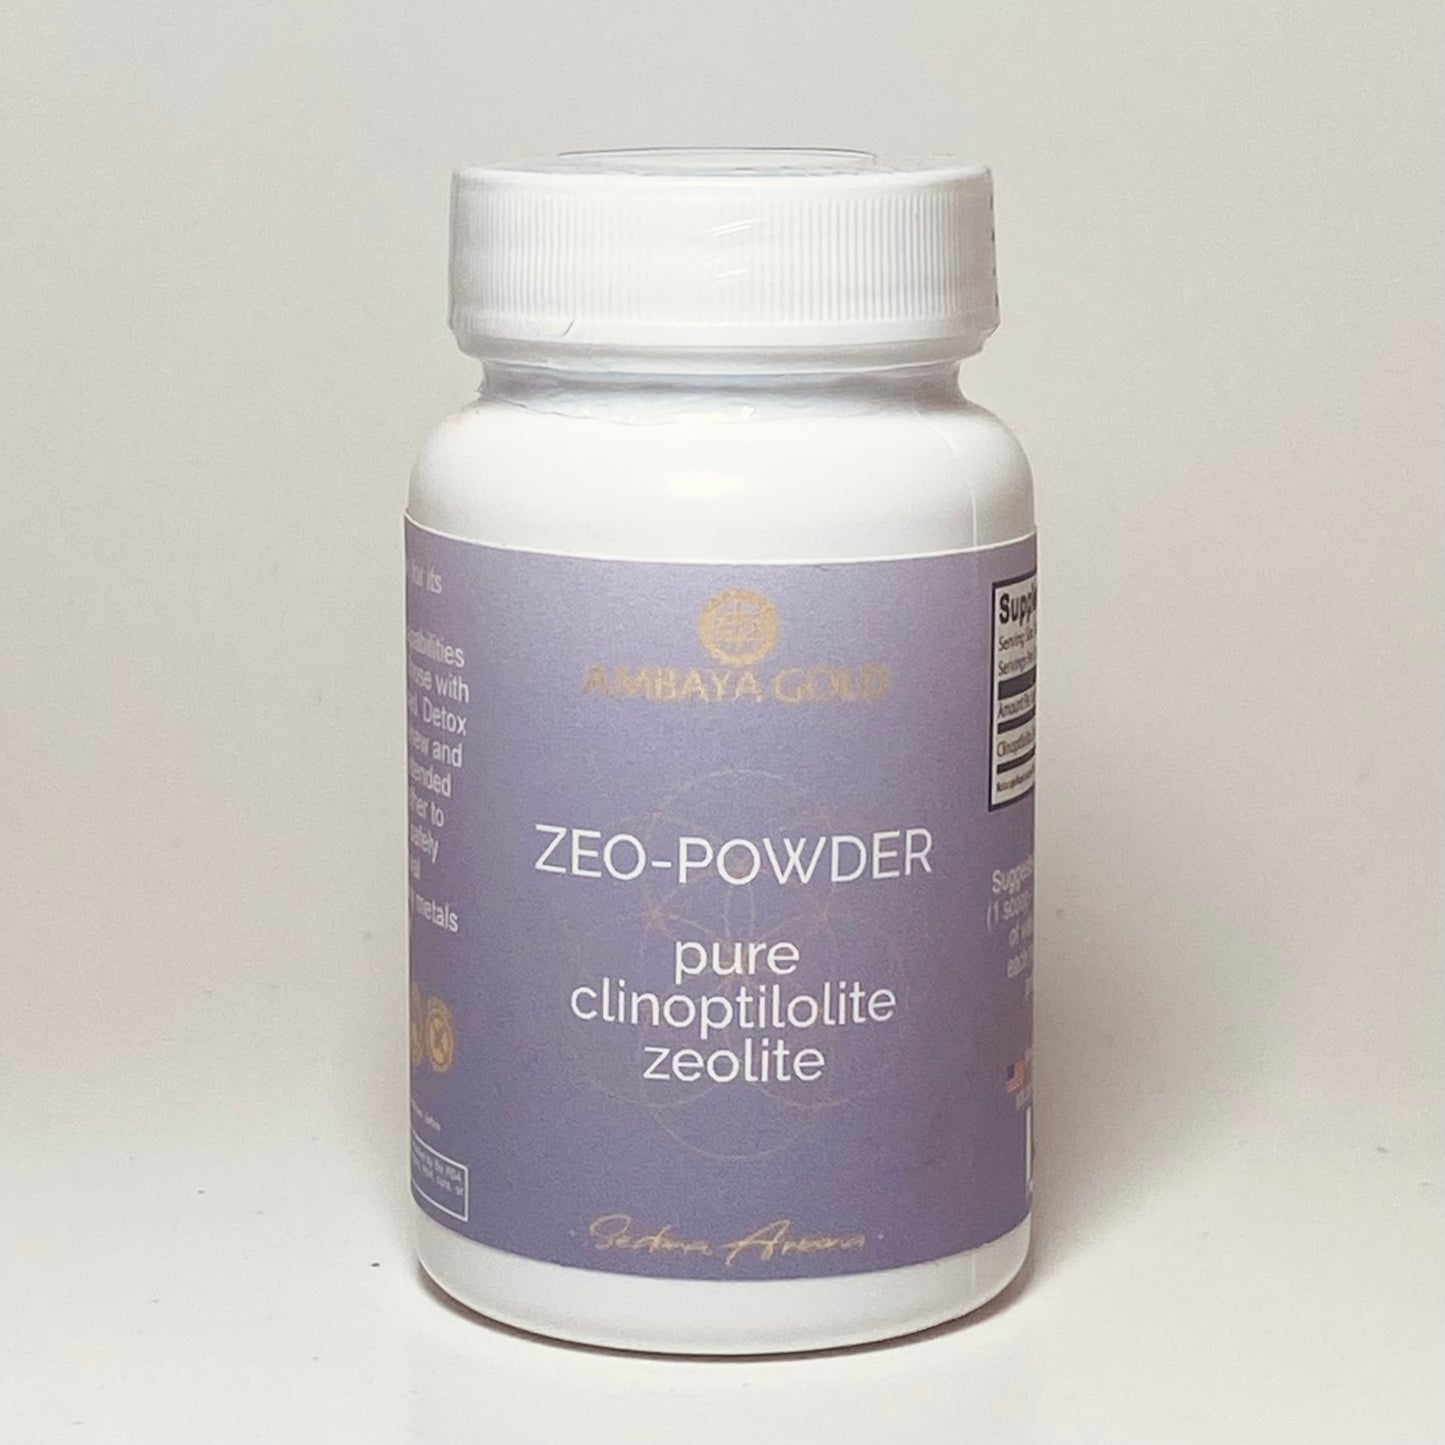 ZeoPowder by Ambaya Gold